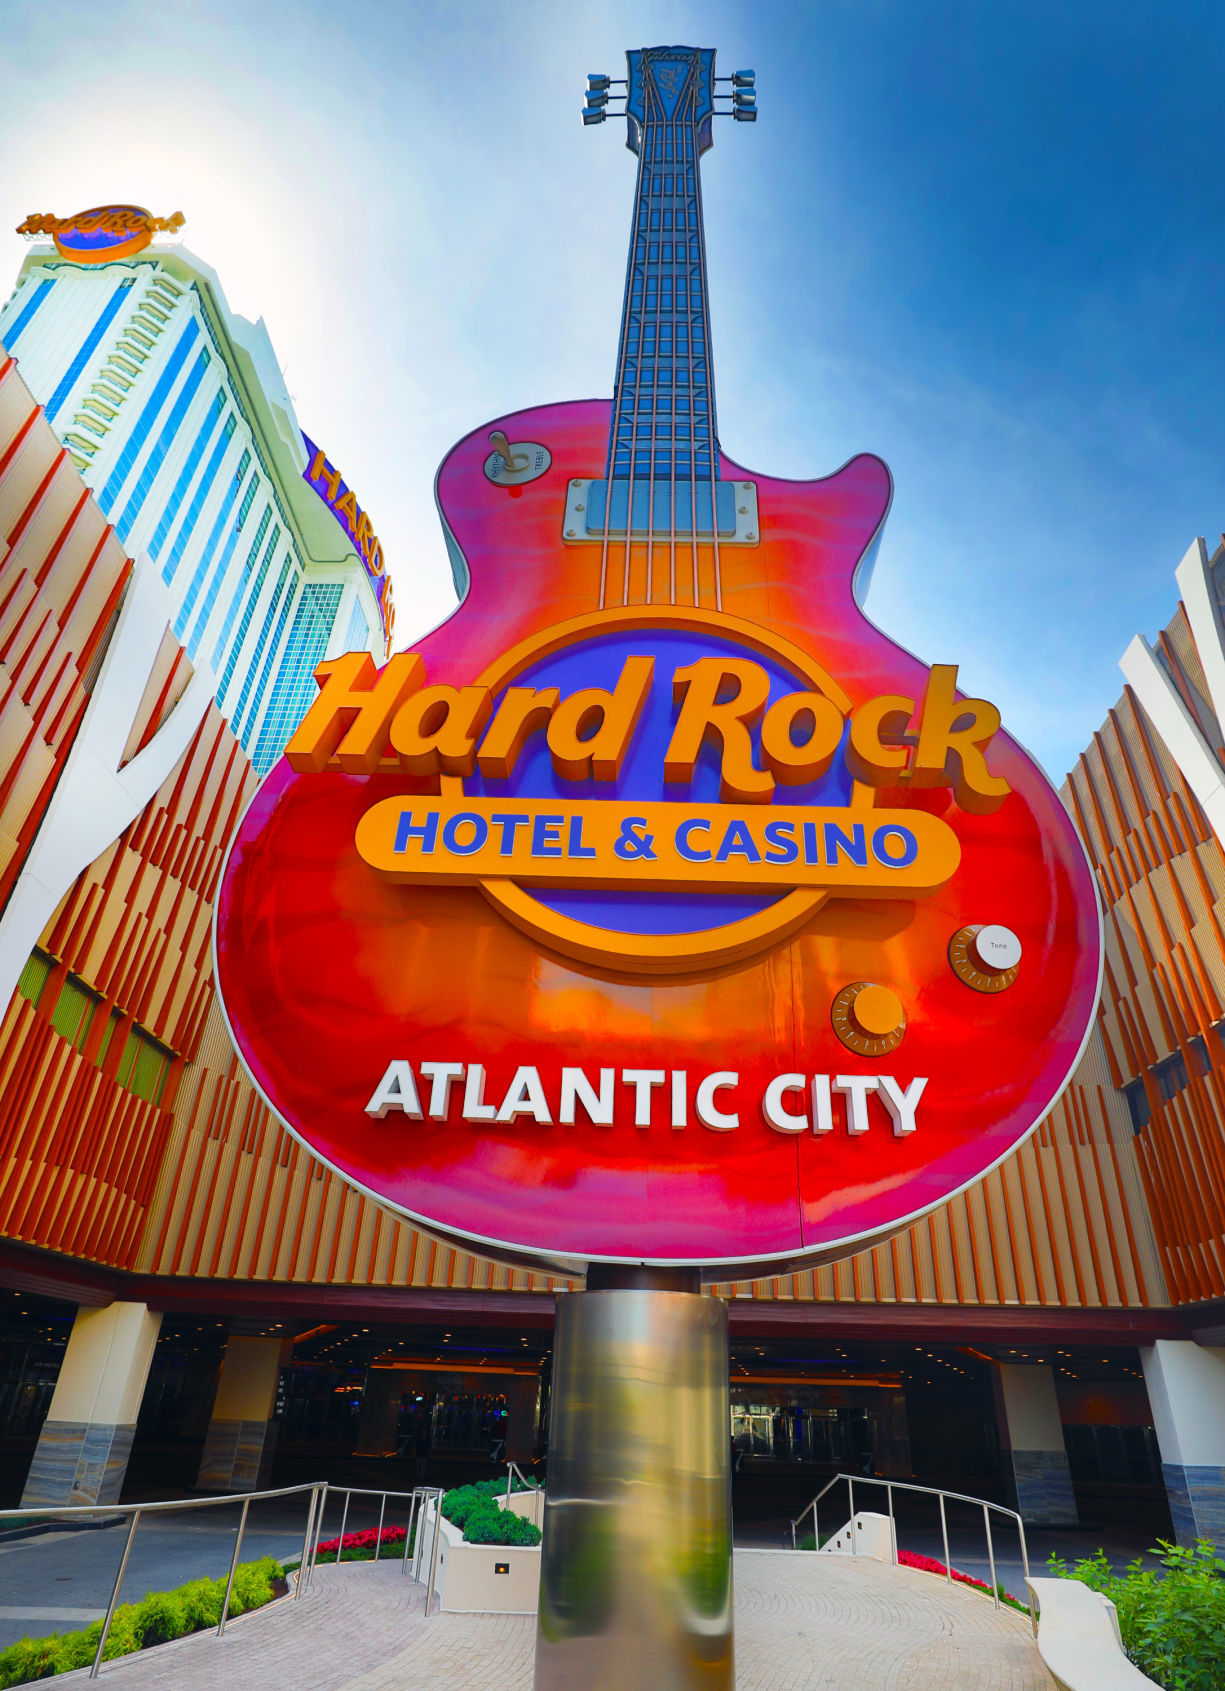 hard rock casino in atlantic city